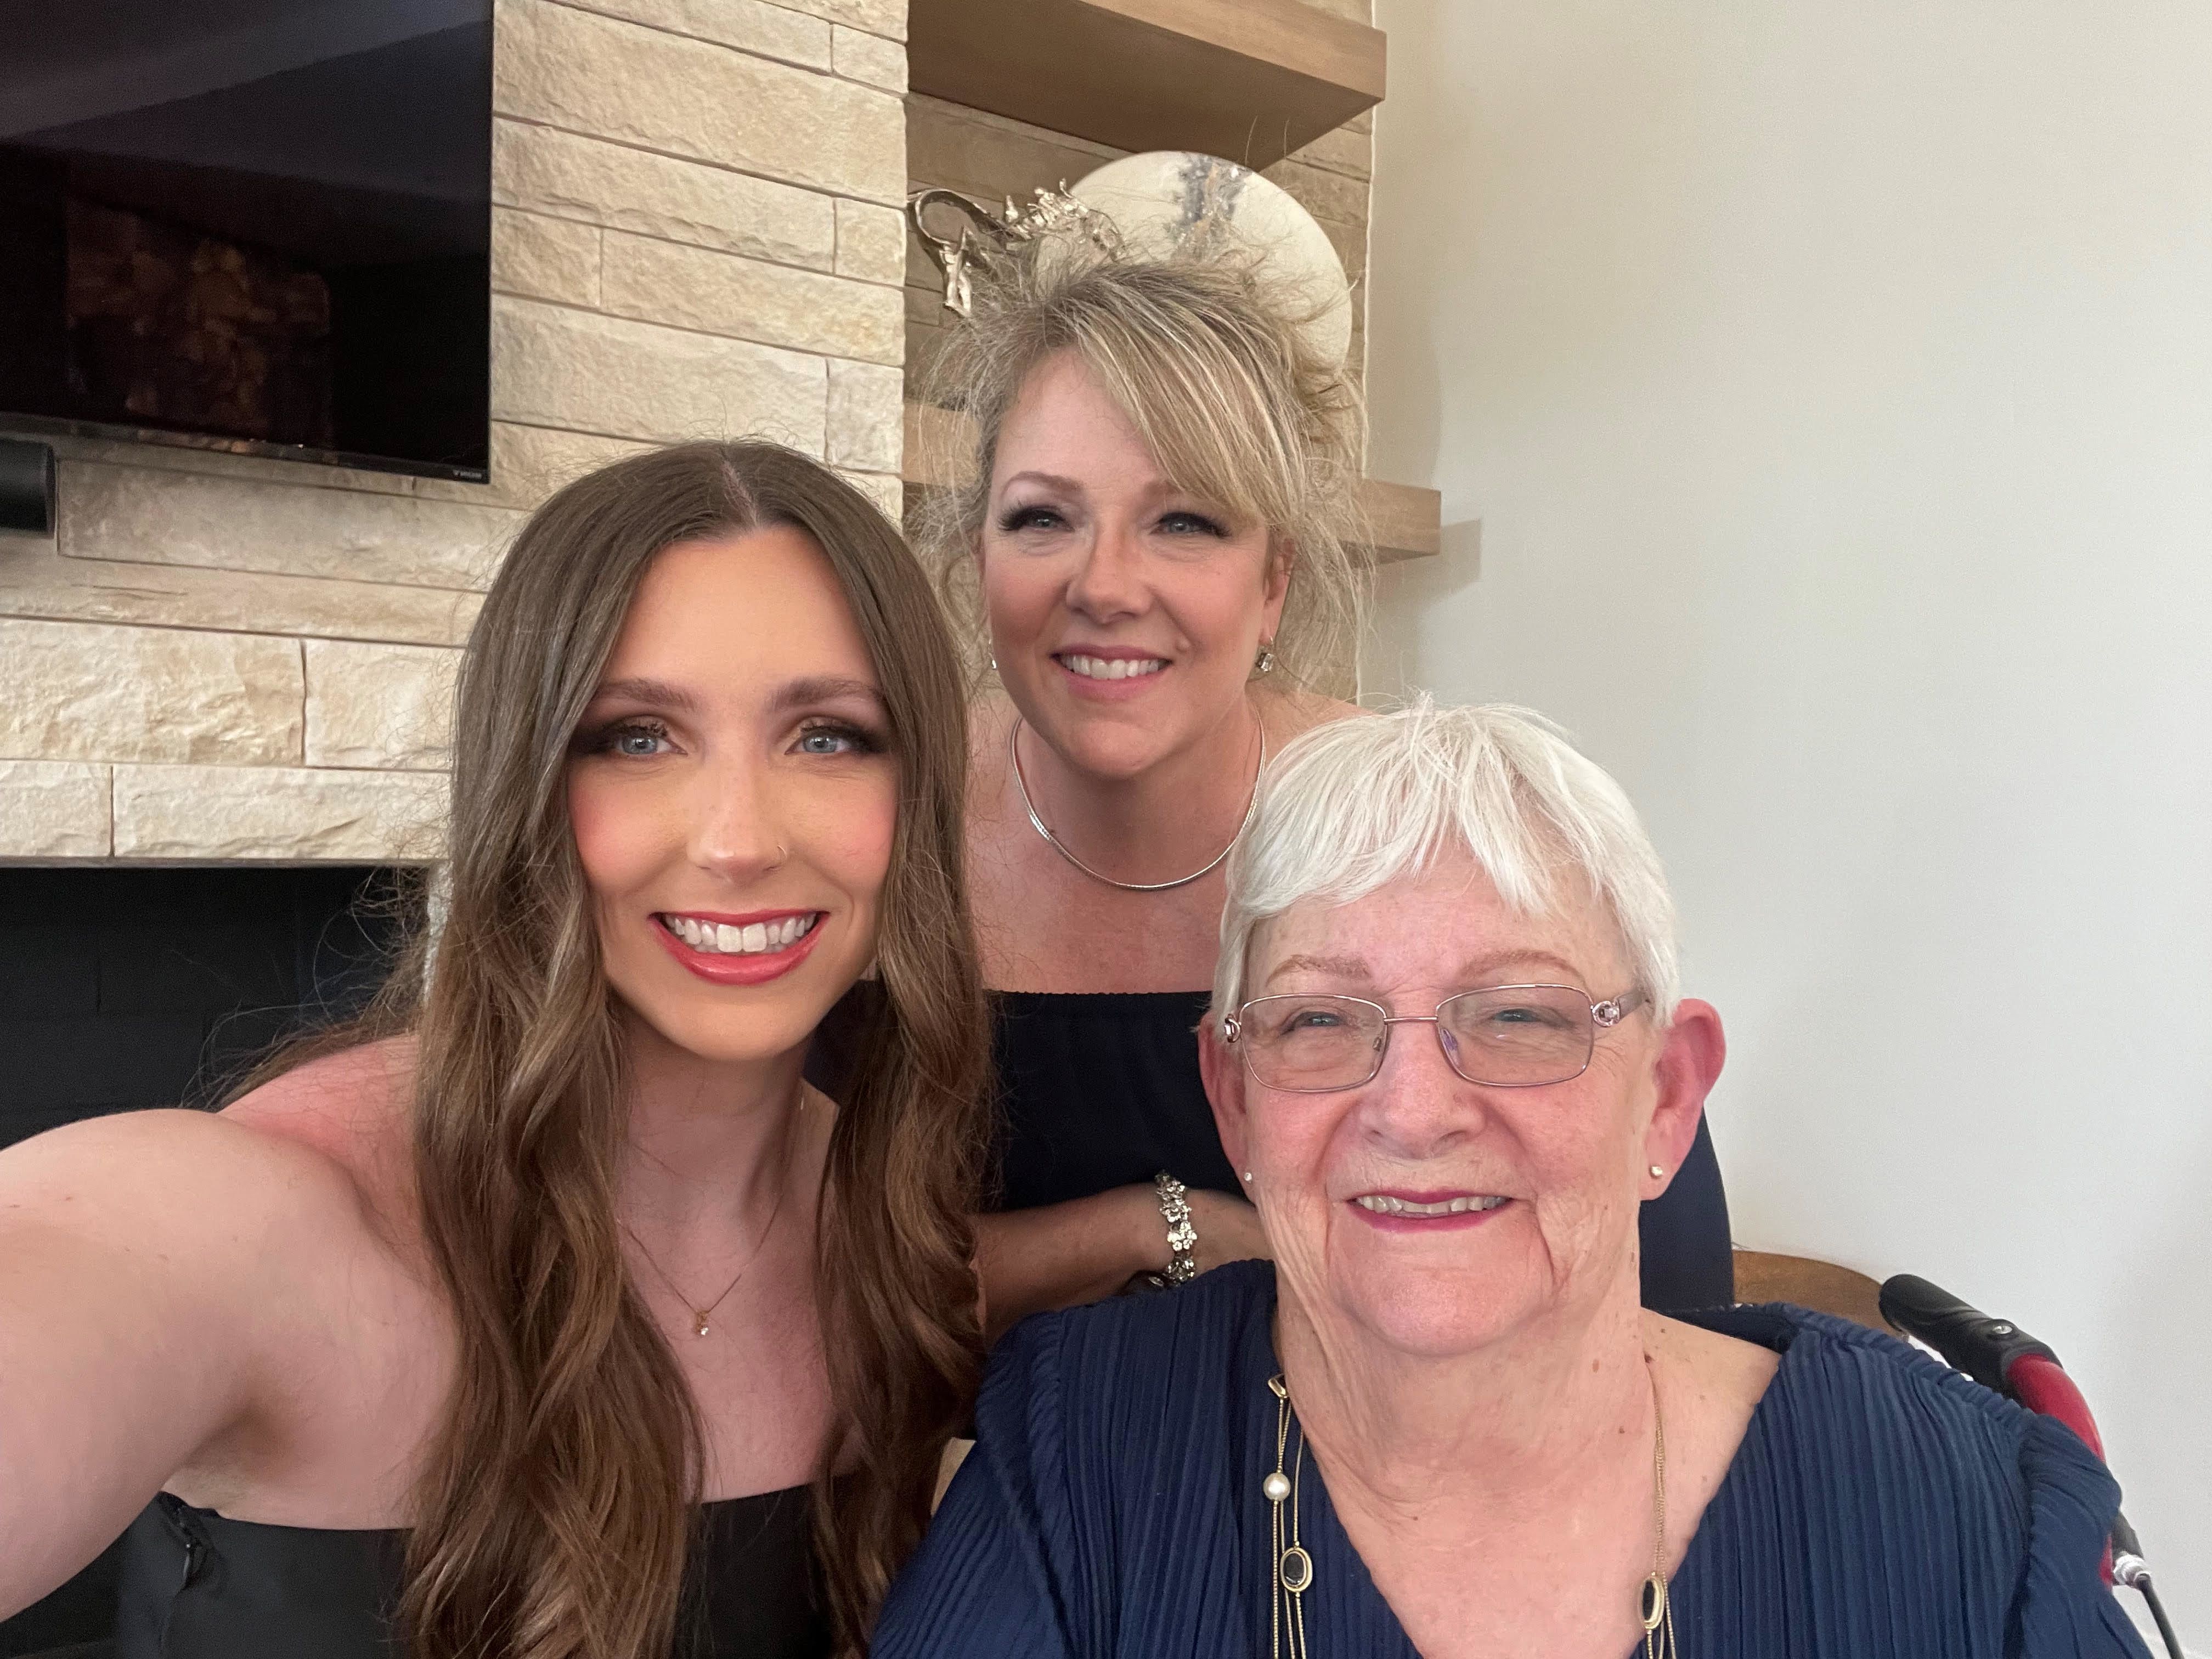 three women smiling